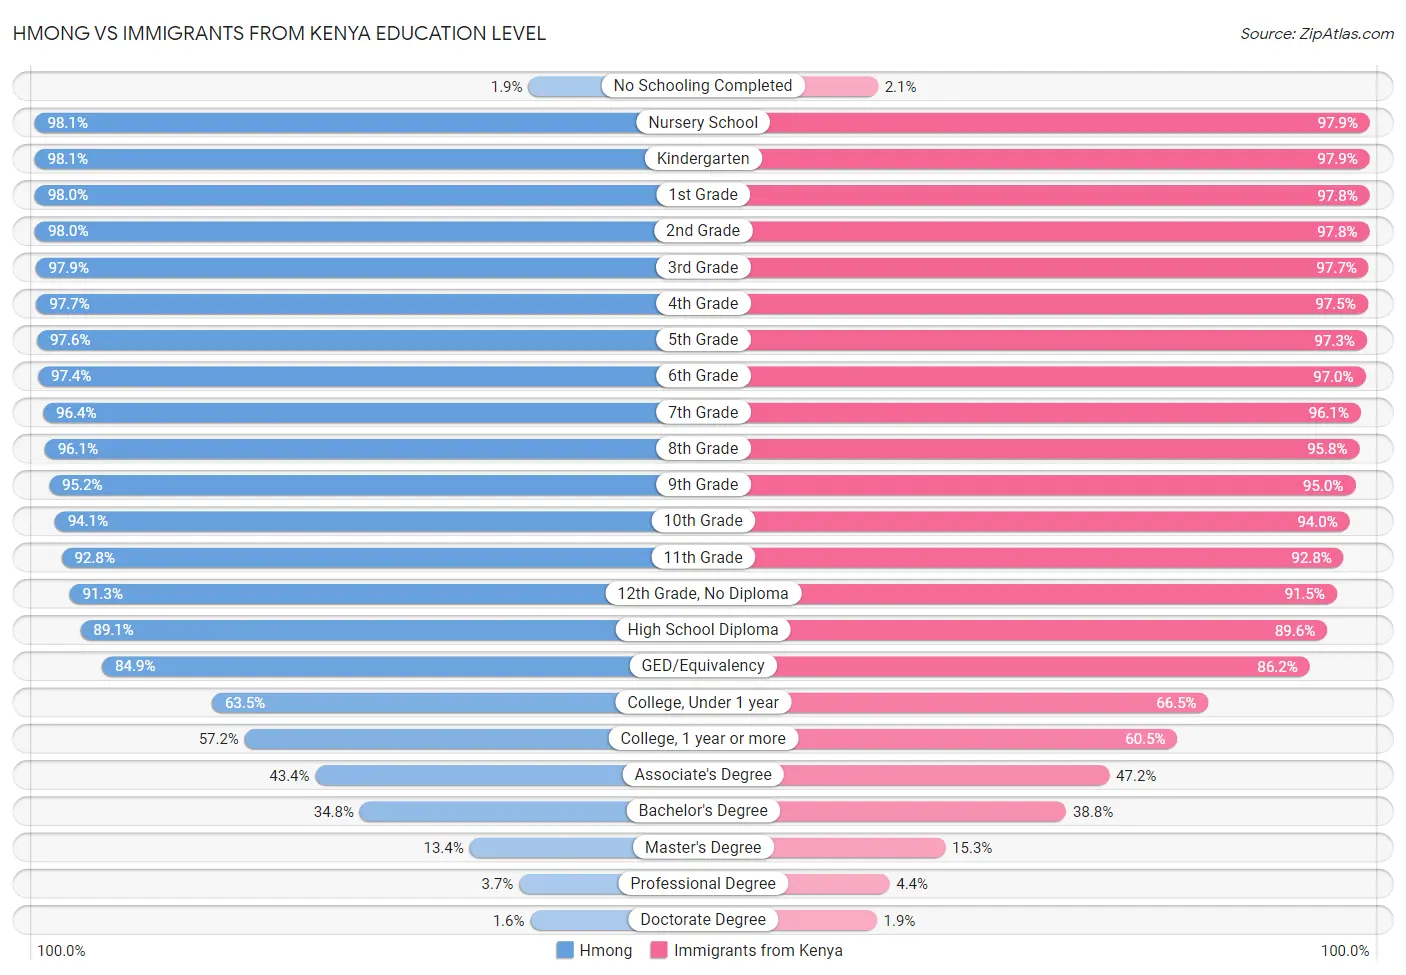 Hmong vs Immigrants from Kenya Education Level